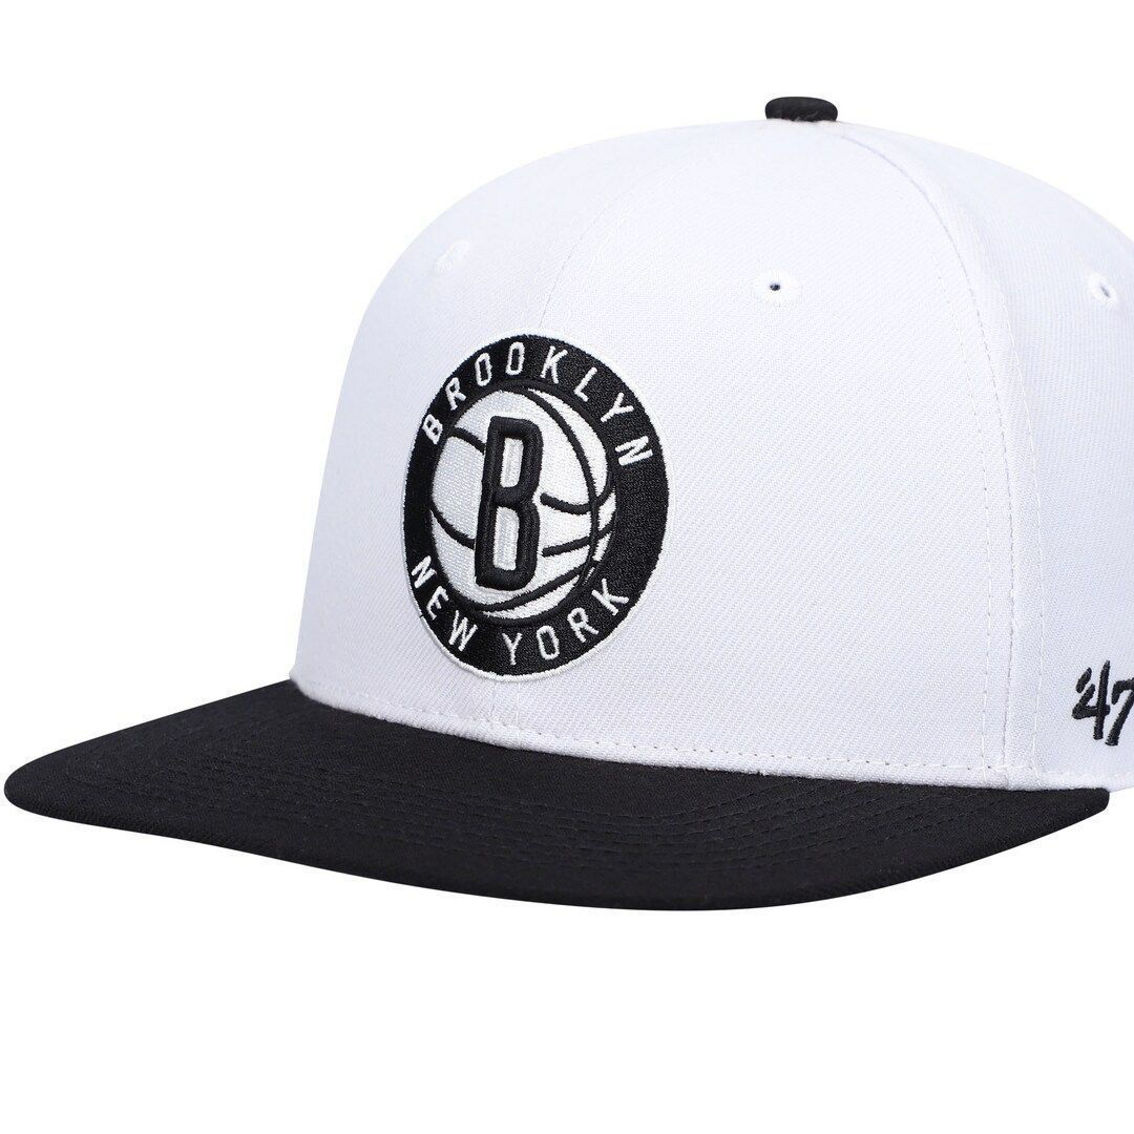 '47 Men's White/Black Brooklyn Nets Two-Tone No Shot Captain Snapback Hat - Image 2 of 4